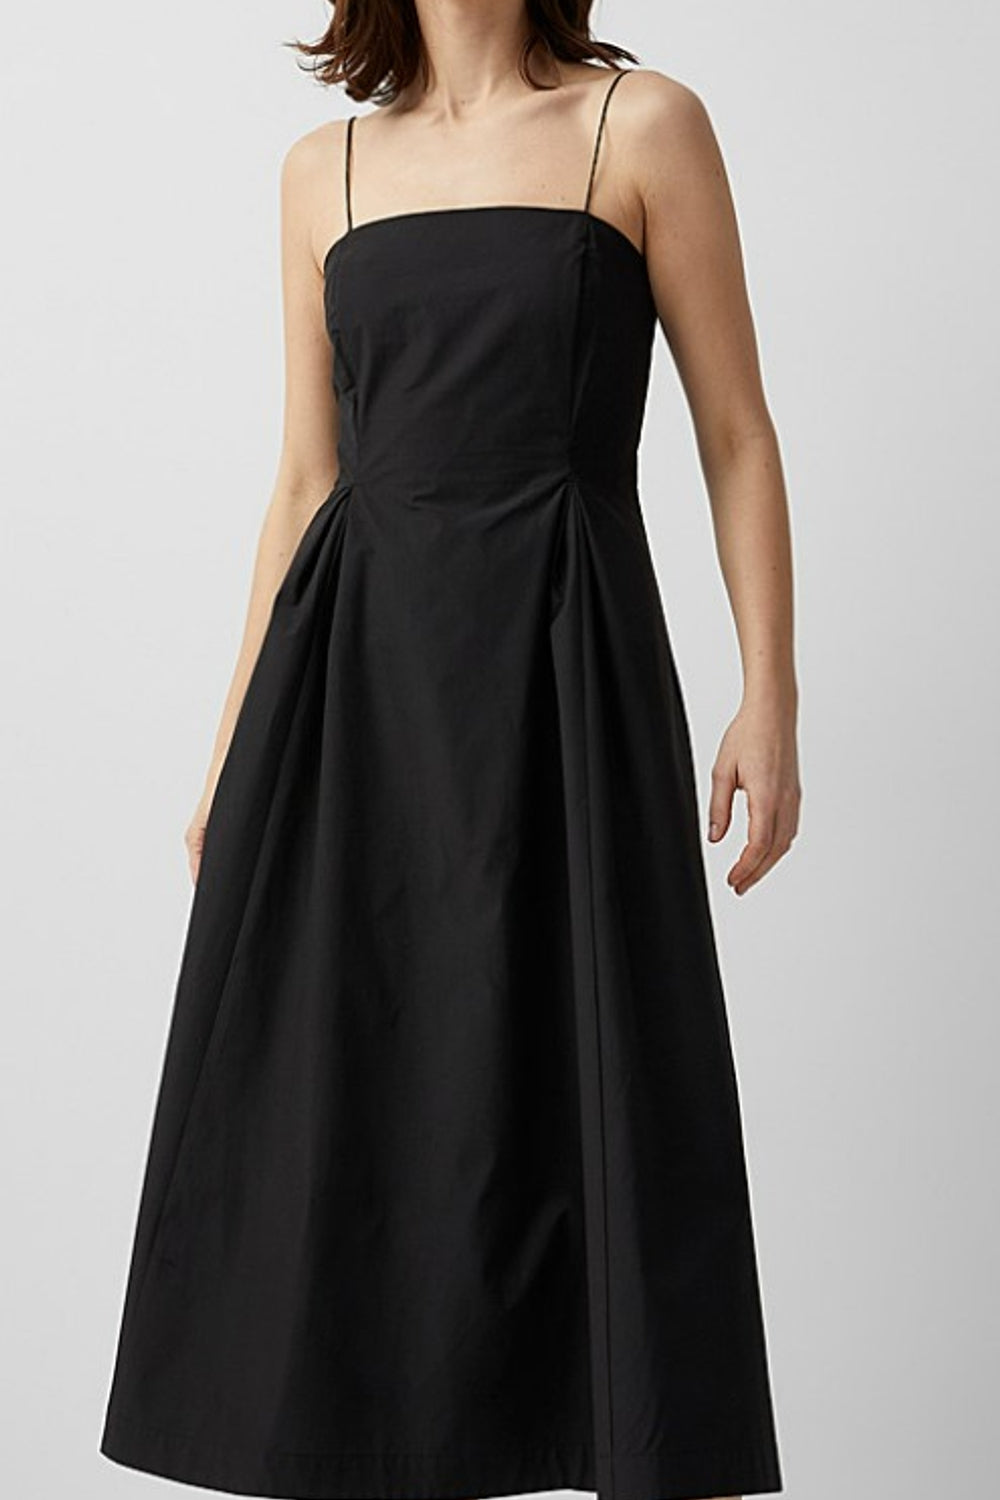 Sonorous Black Dress